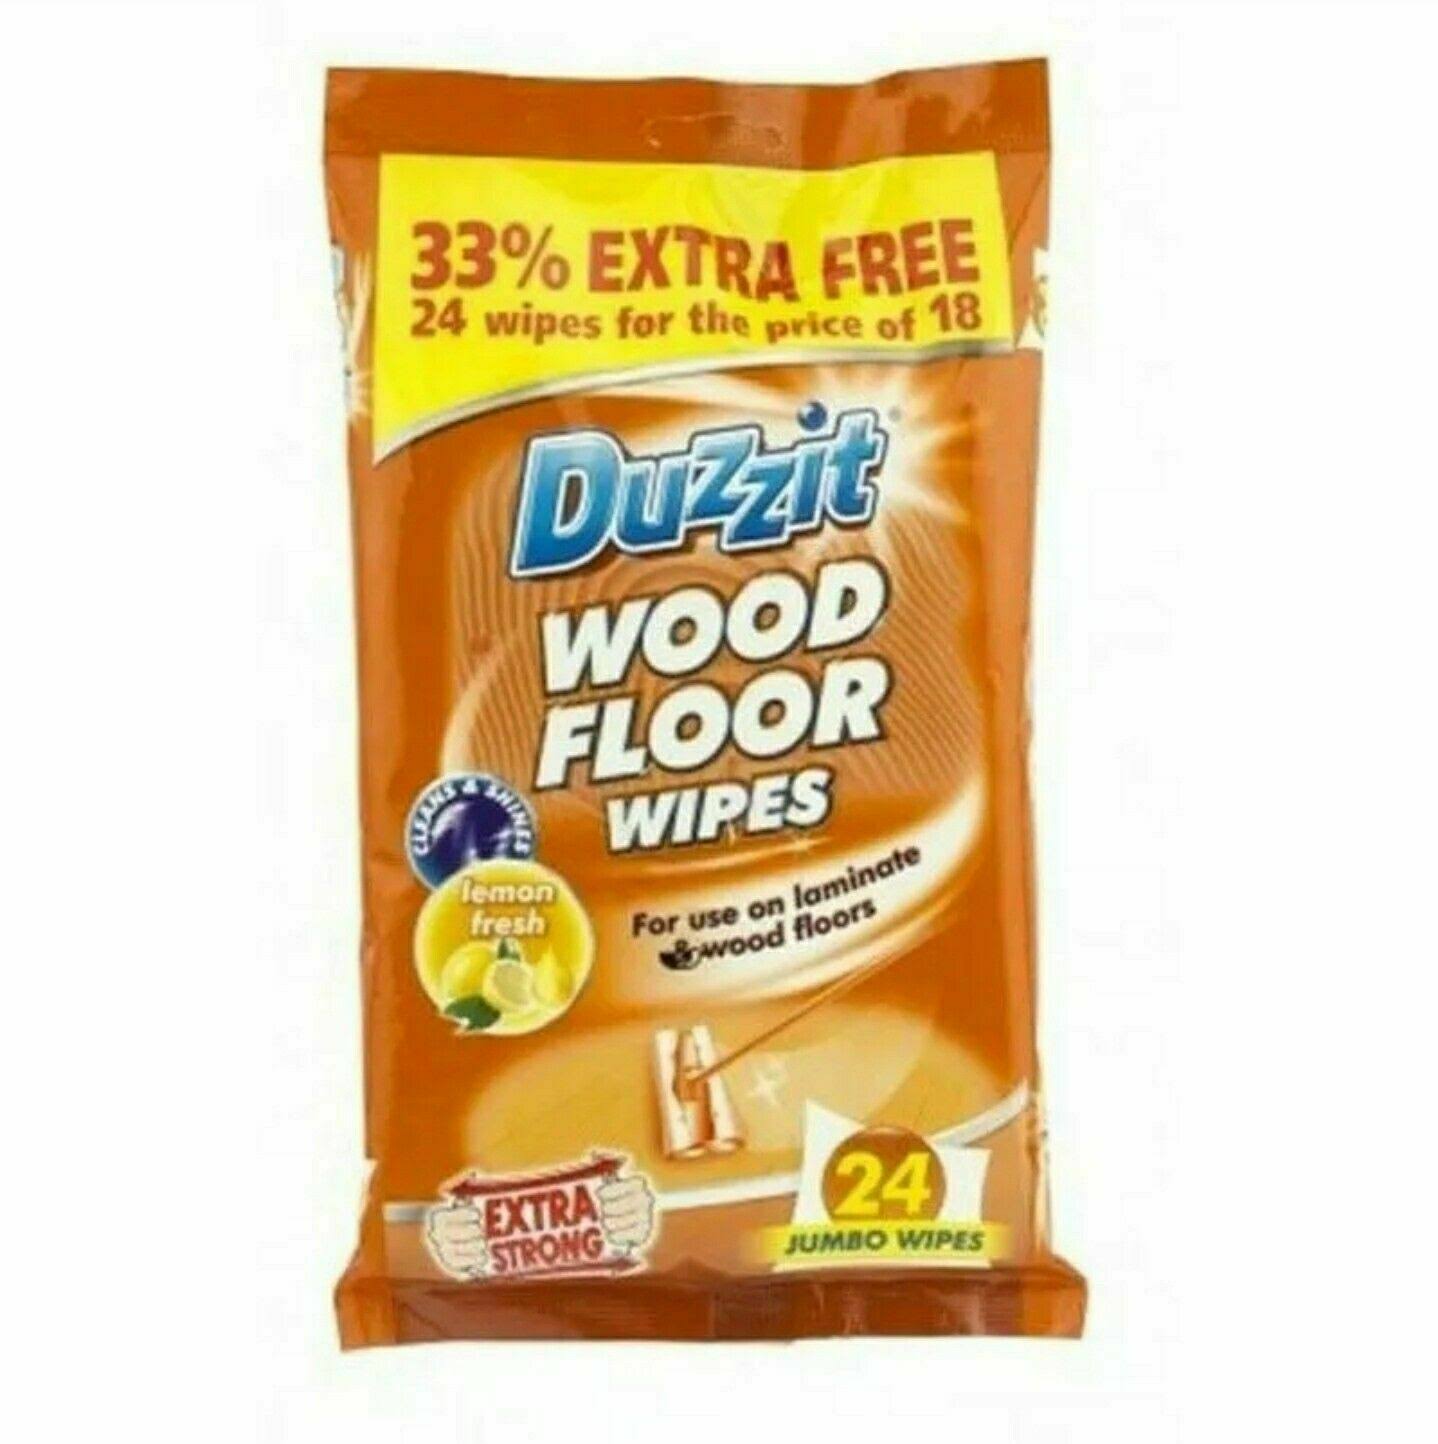 Duzzit Wood Floor Wipes 24 Pack